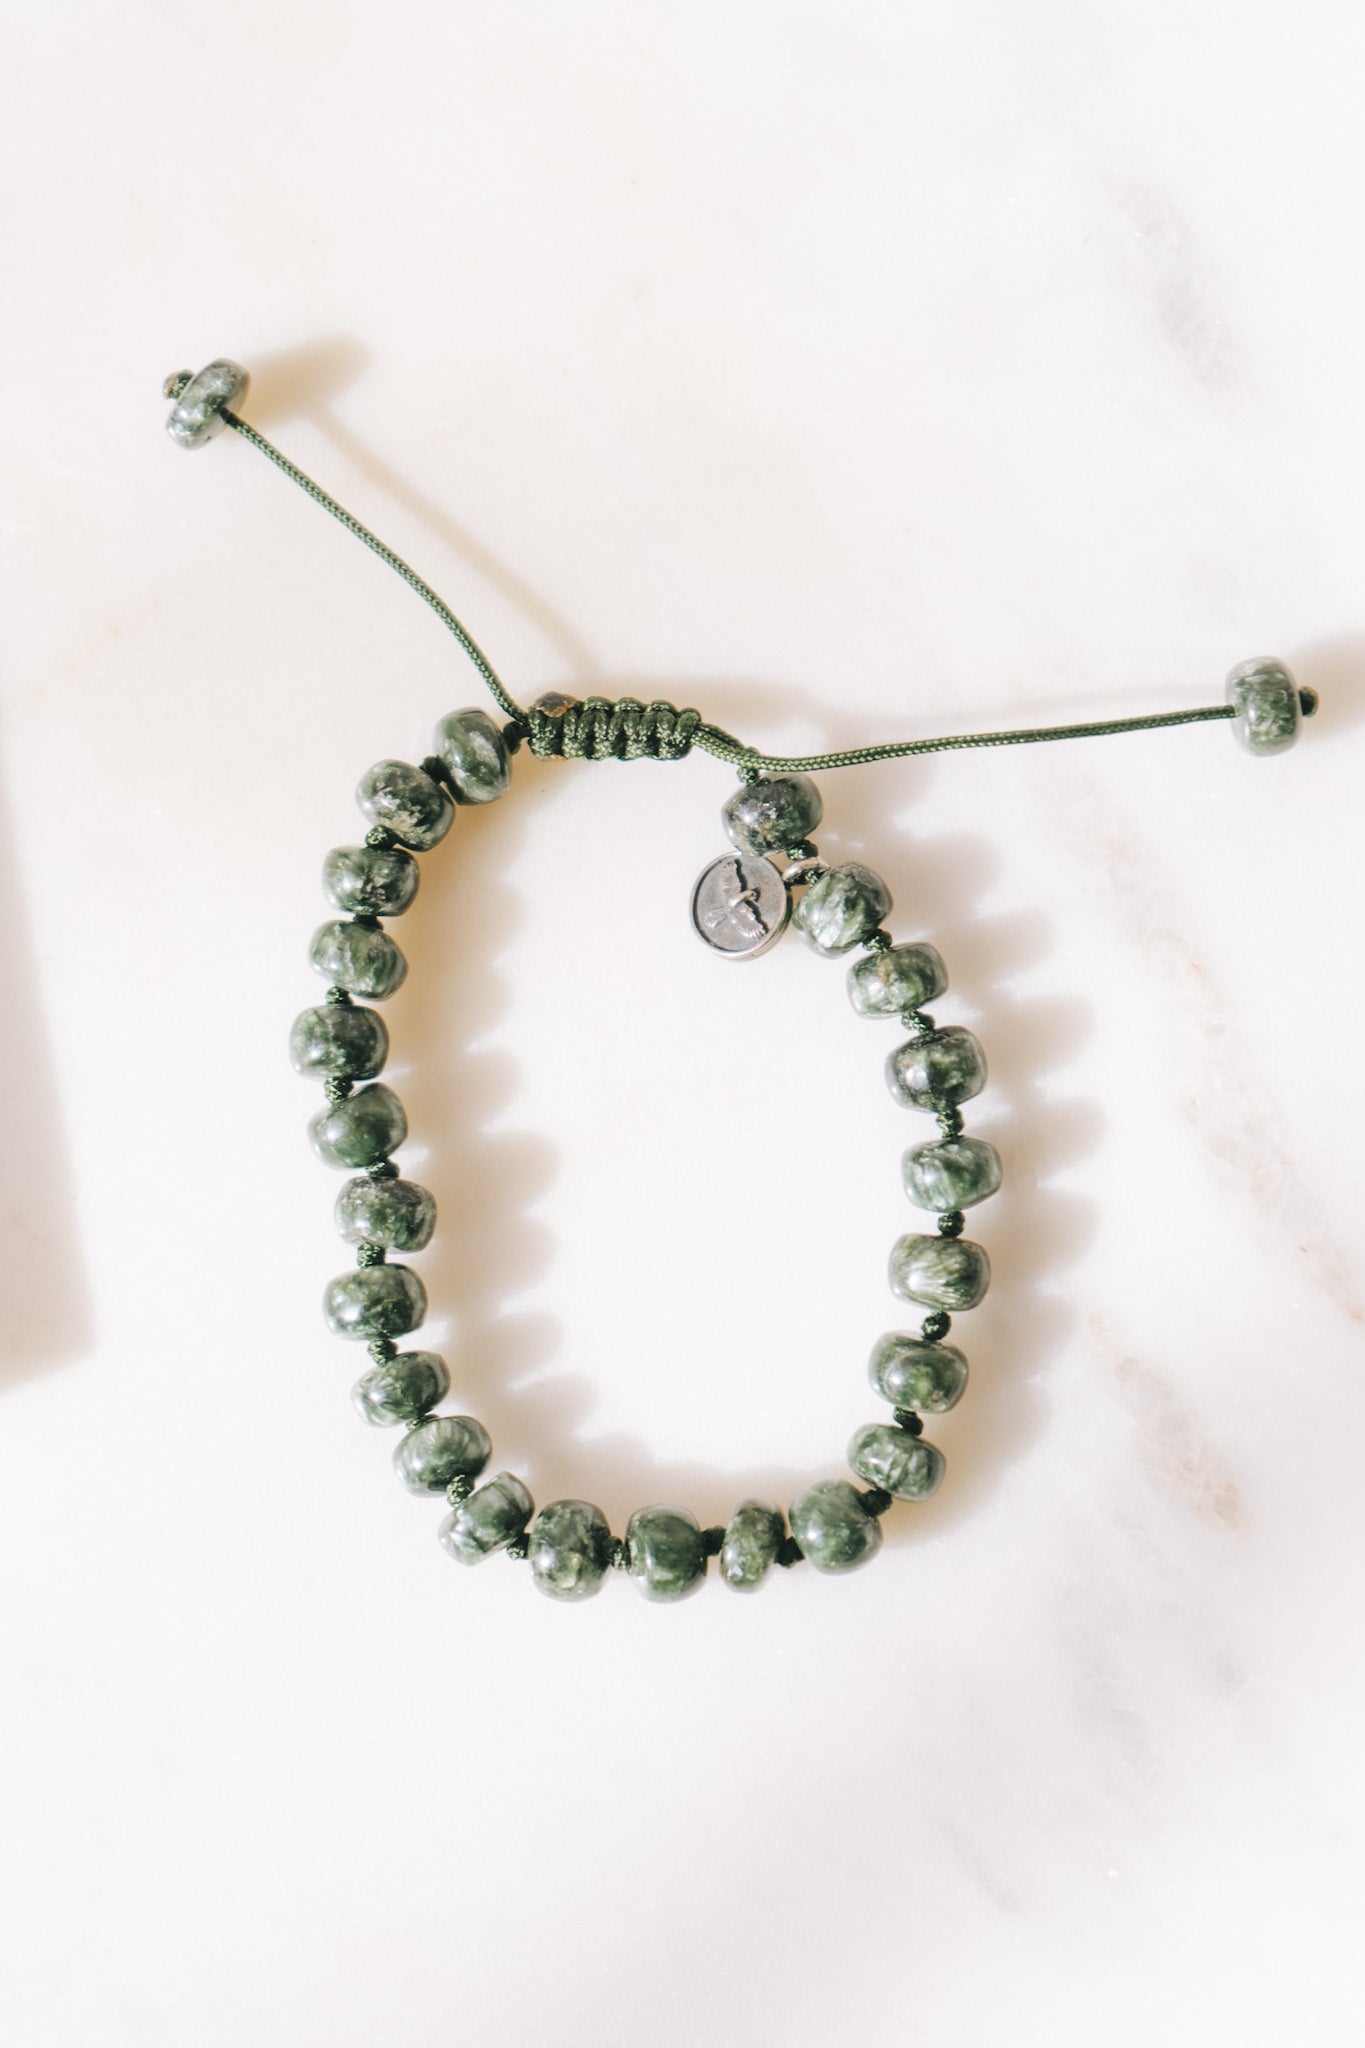 Fluorite Green and Purple Bracelet – Joseph Brooks Jewelry